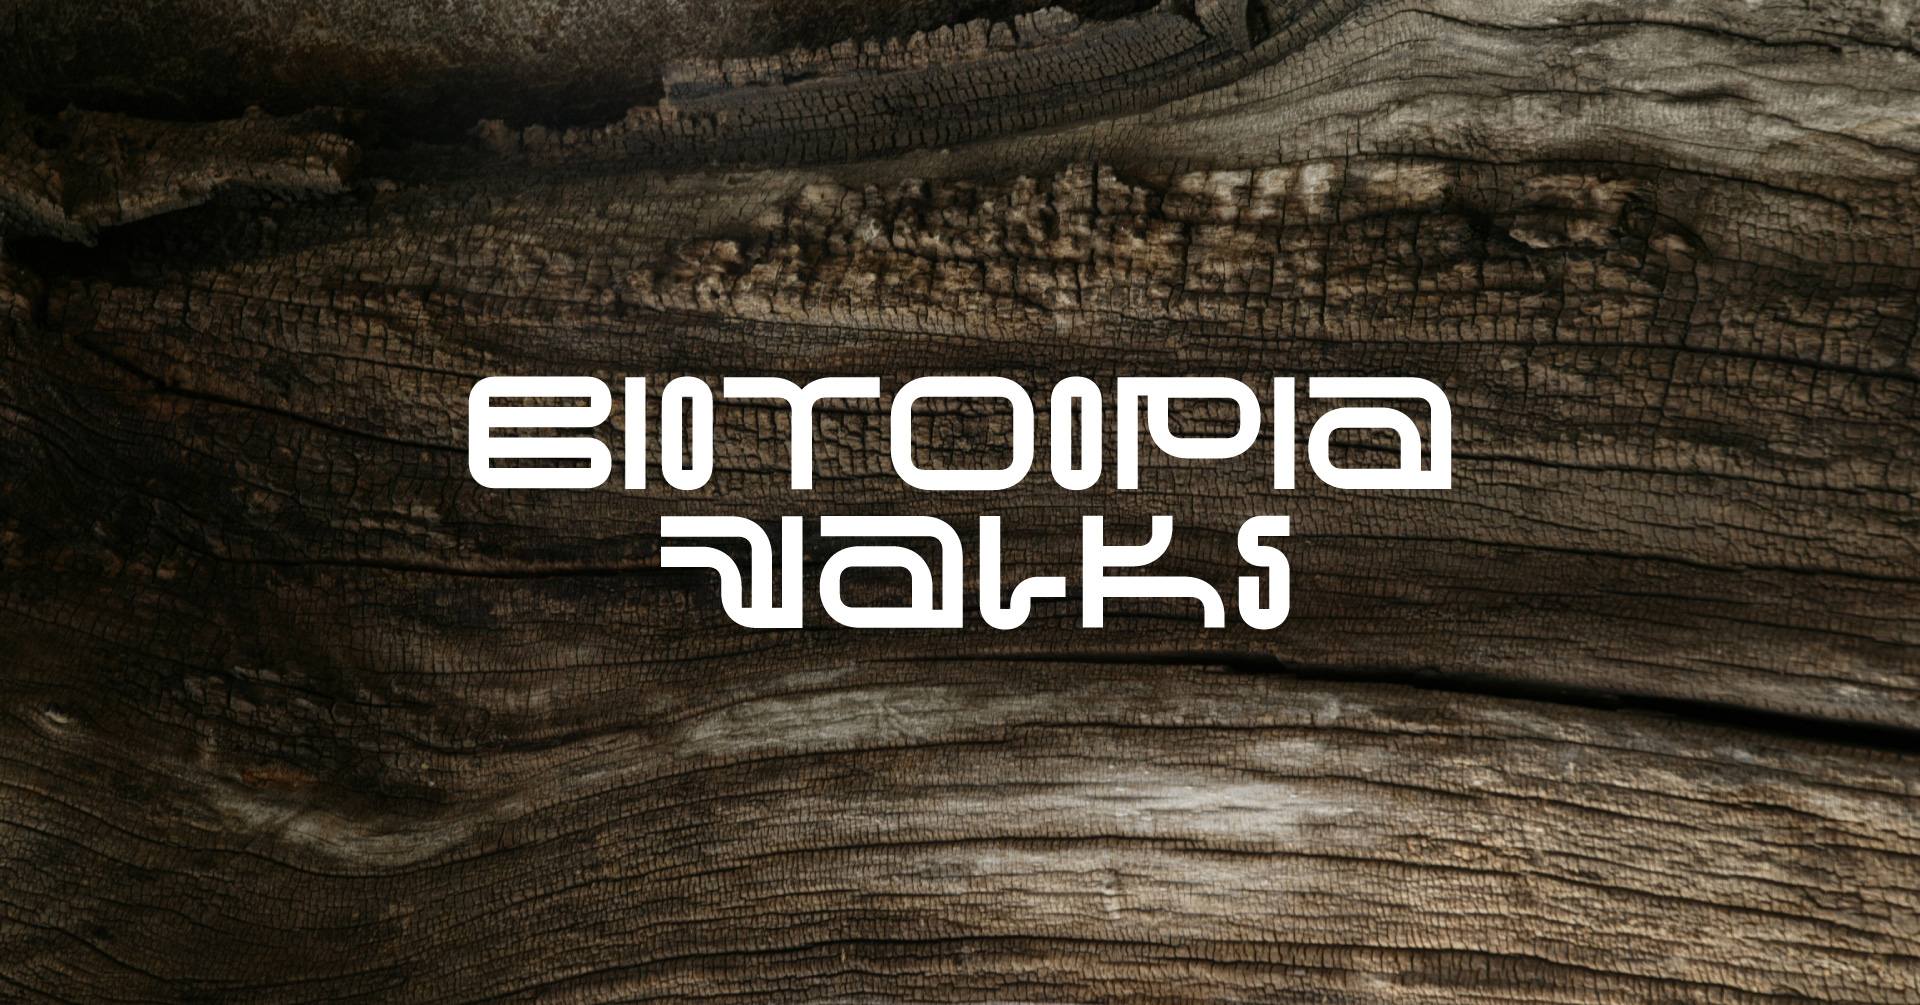 Biotoopia’22 Walks: Interspieces City